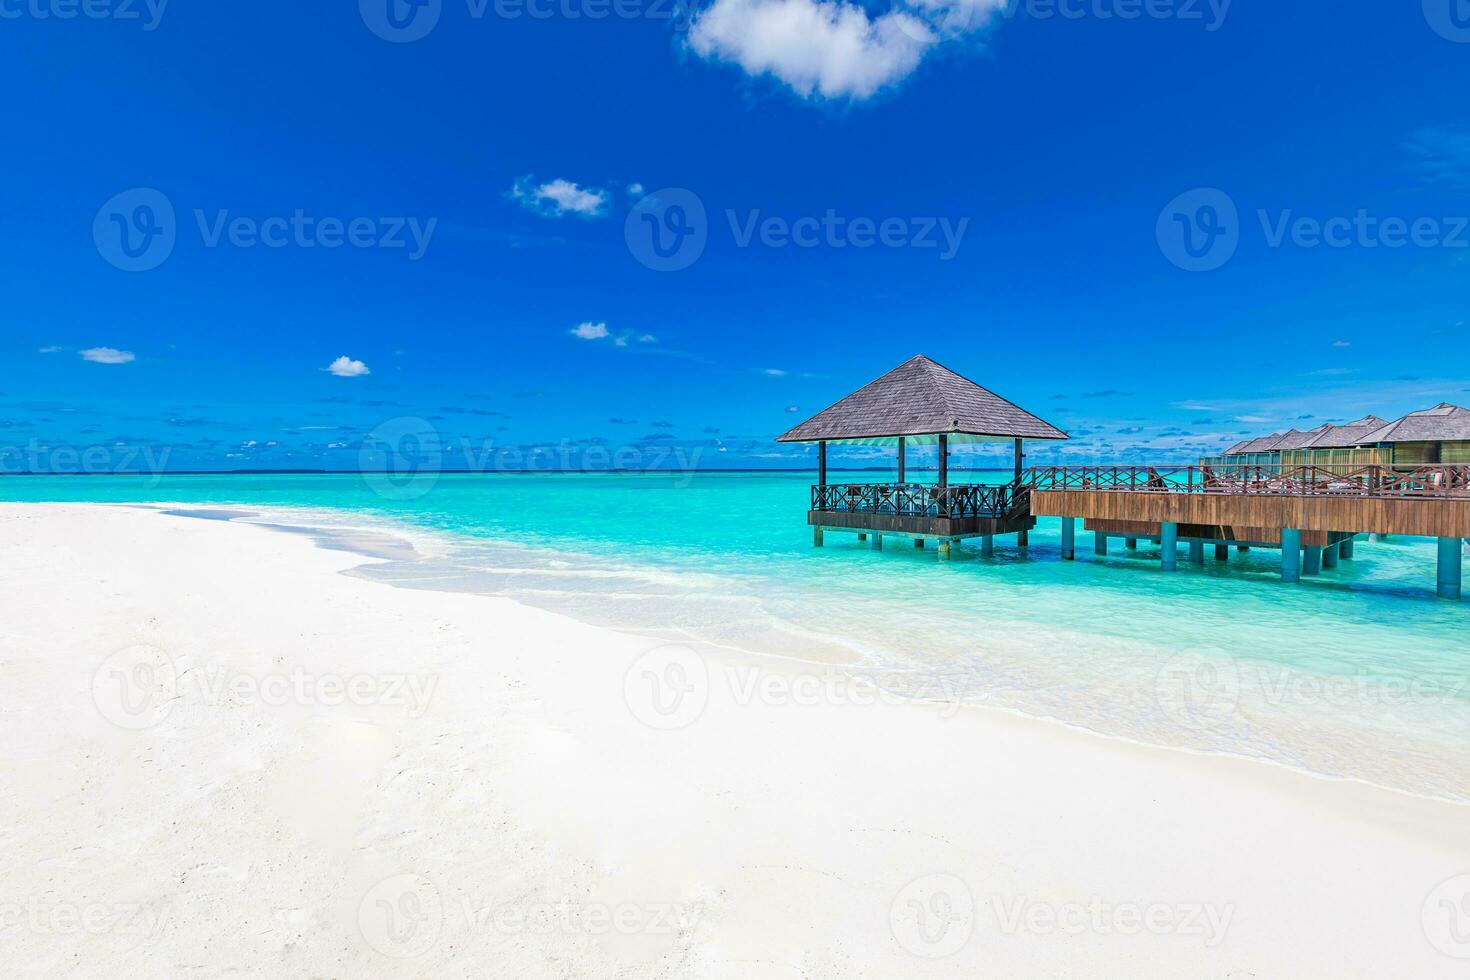 fantástico verano paisaje, tropical naturaleza vista. blanco arena azul mar como lujoso verano vacaciones o fiesta antecedentes. Maldivas o caribe costa paisaje, naturaleza panorama foto